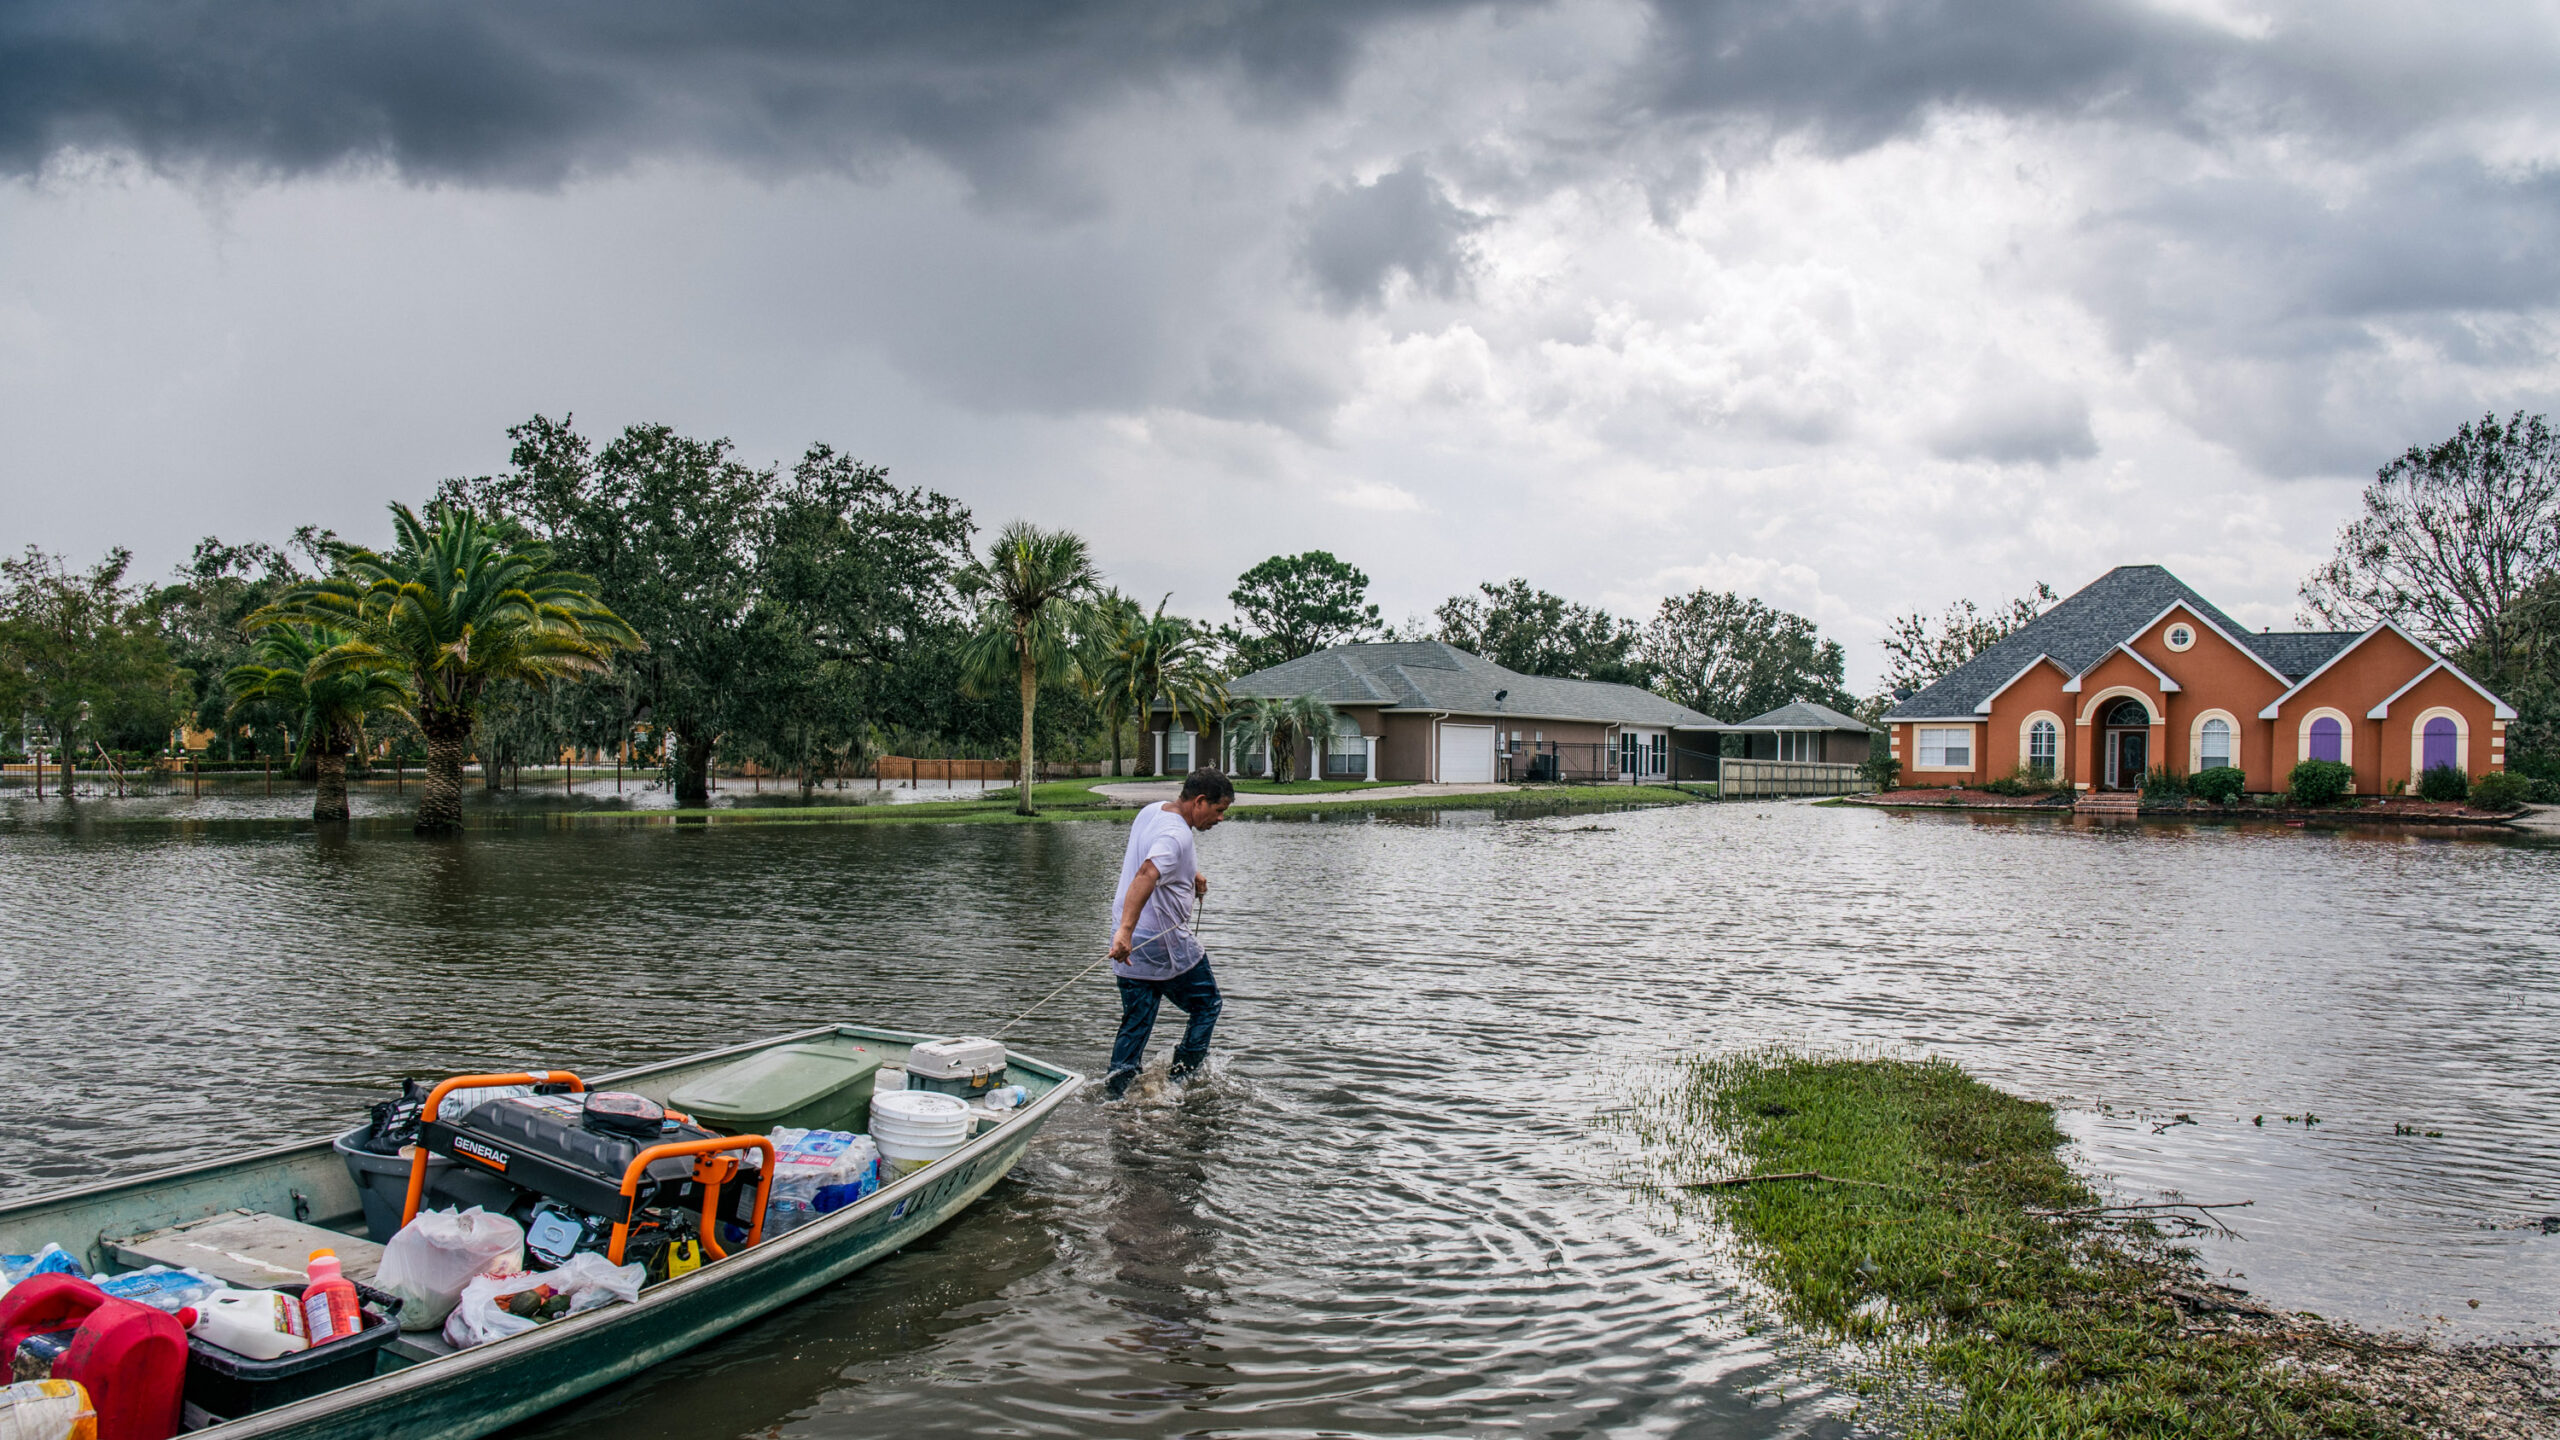 A man pulls a boat through a flooded neighborhood